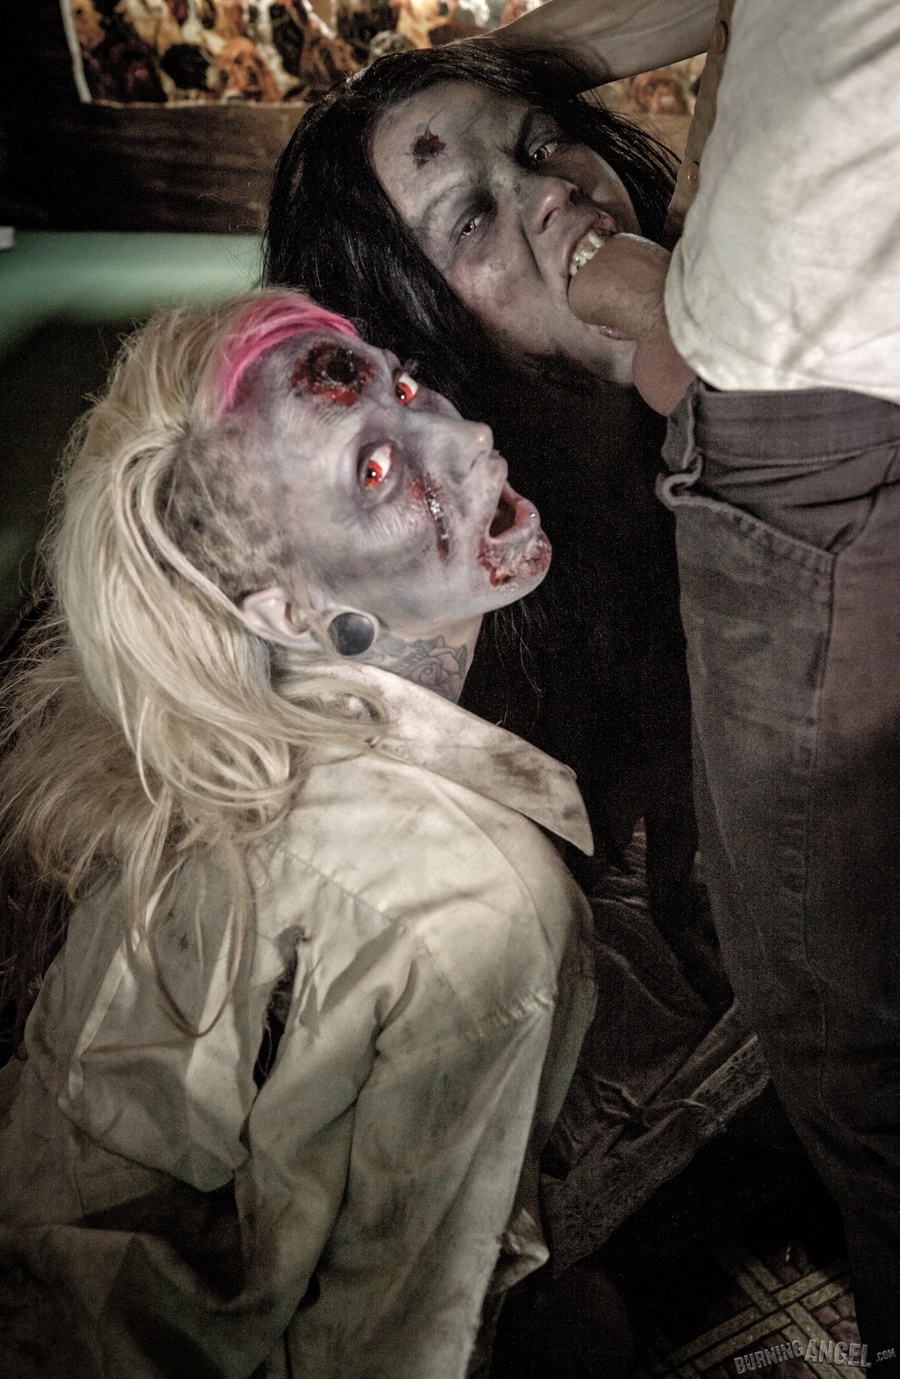 Lynn Xxx Zombie Porn - Even zombies need fun as costumed zombie gi - XXX Dessert - Picture 4